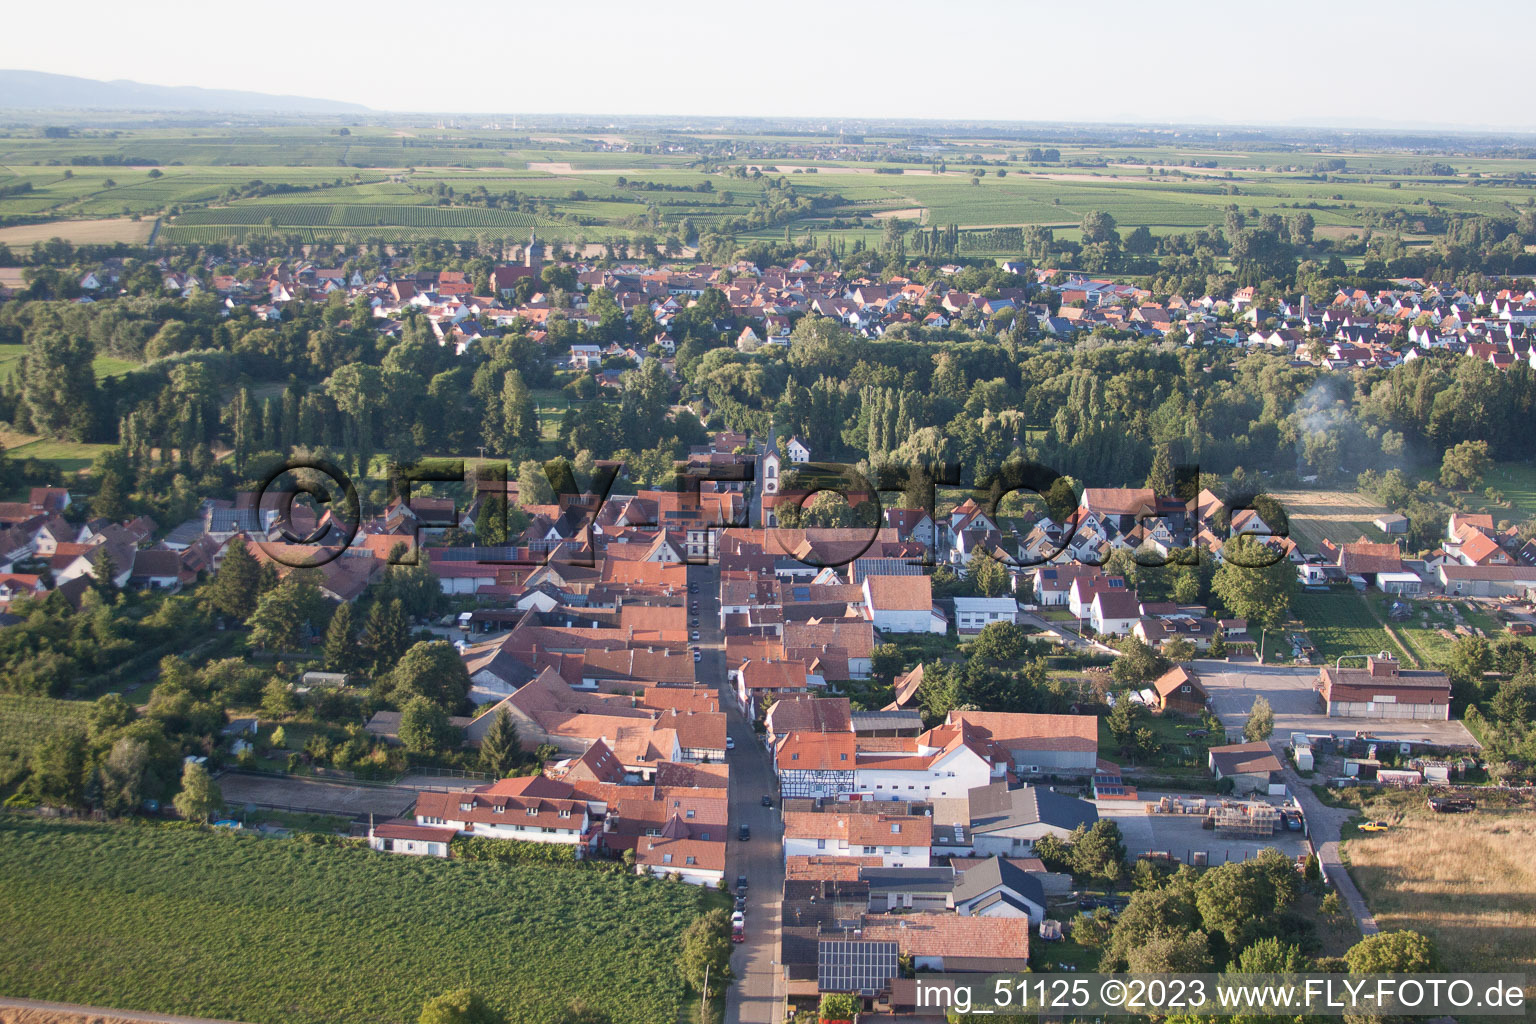 District Mühlhofen in Billigheim-Ingenheim in the state Rhineland-Palatinate, Germany seen from a drone